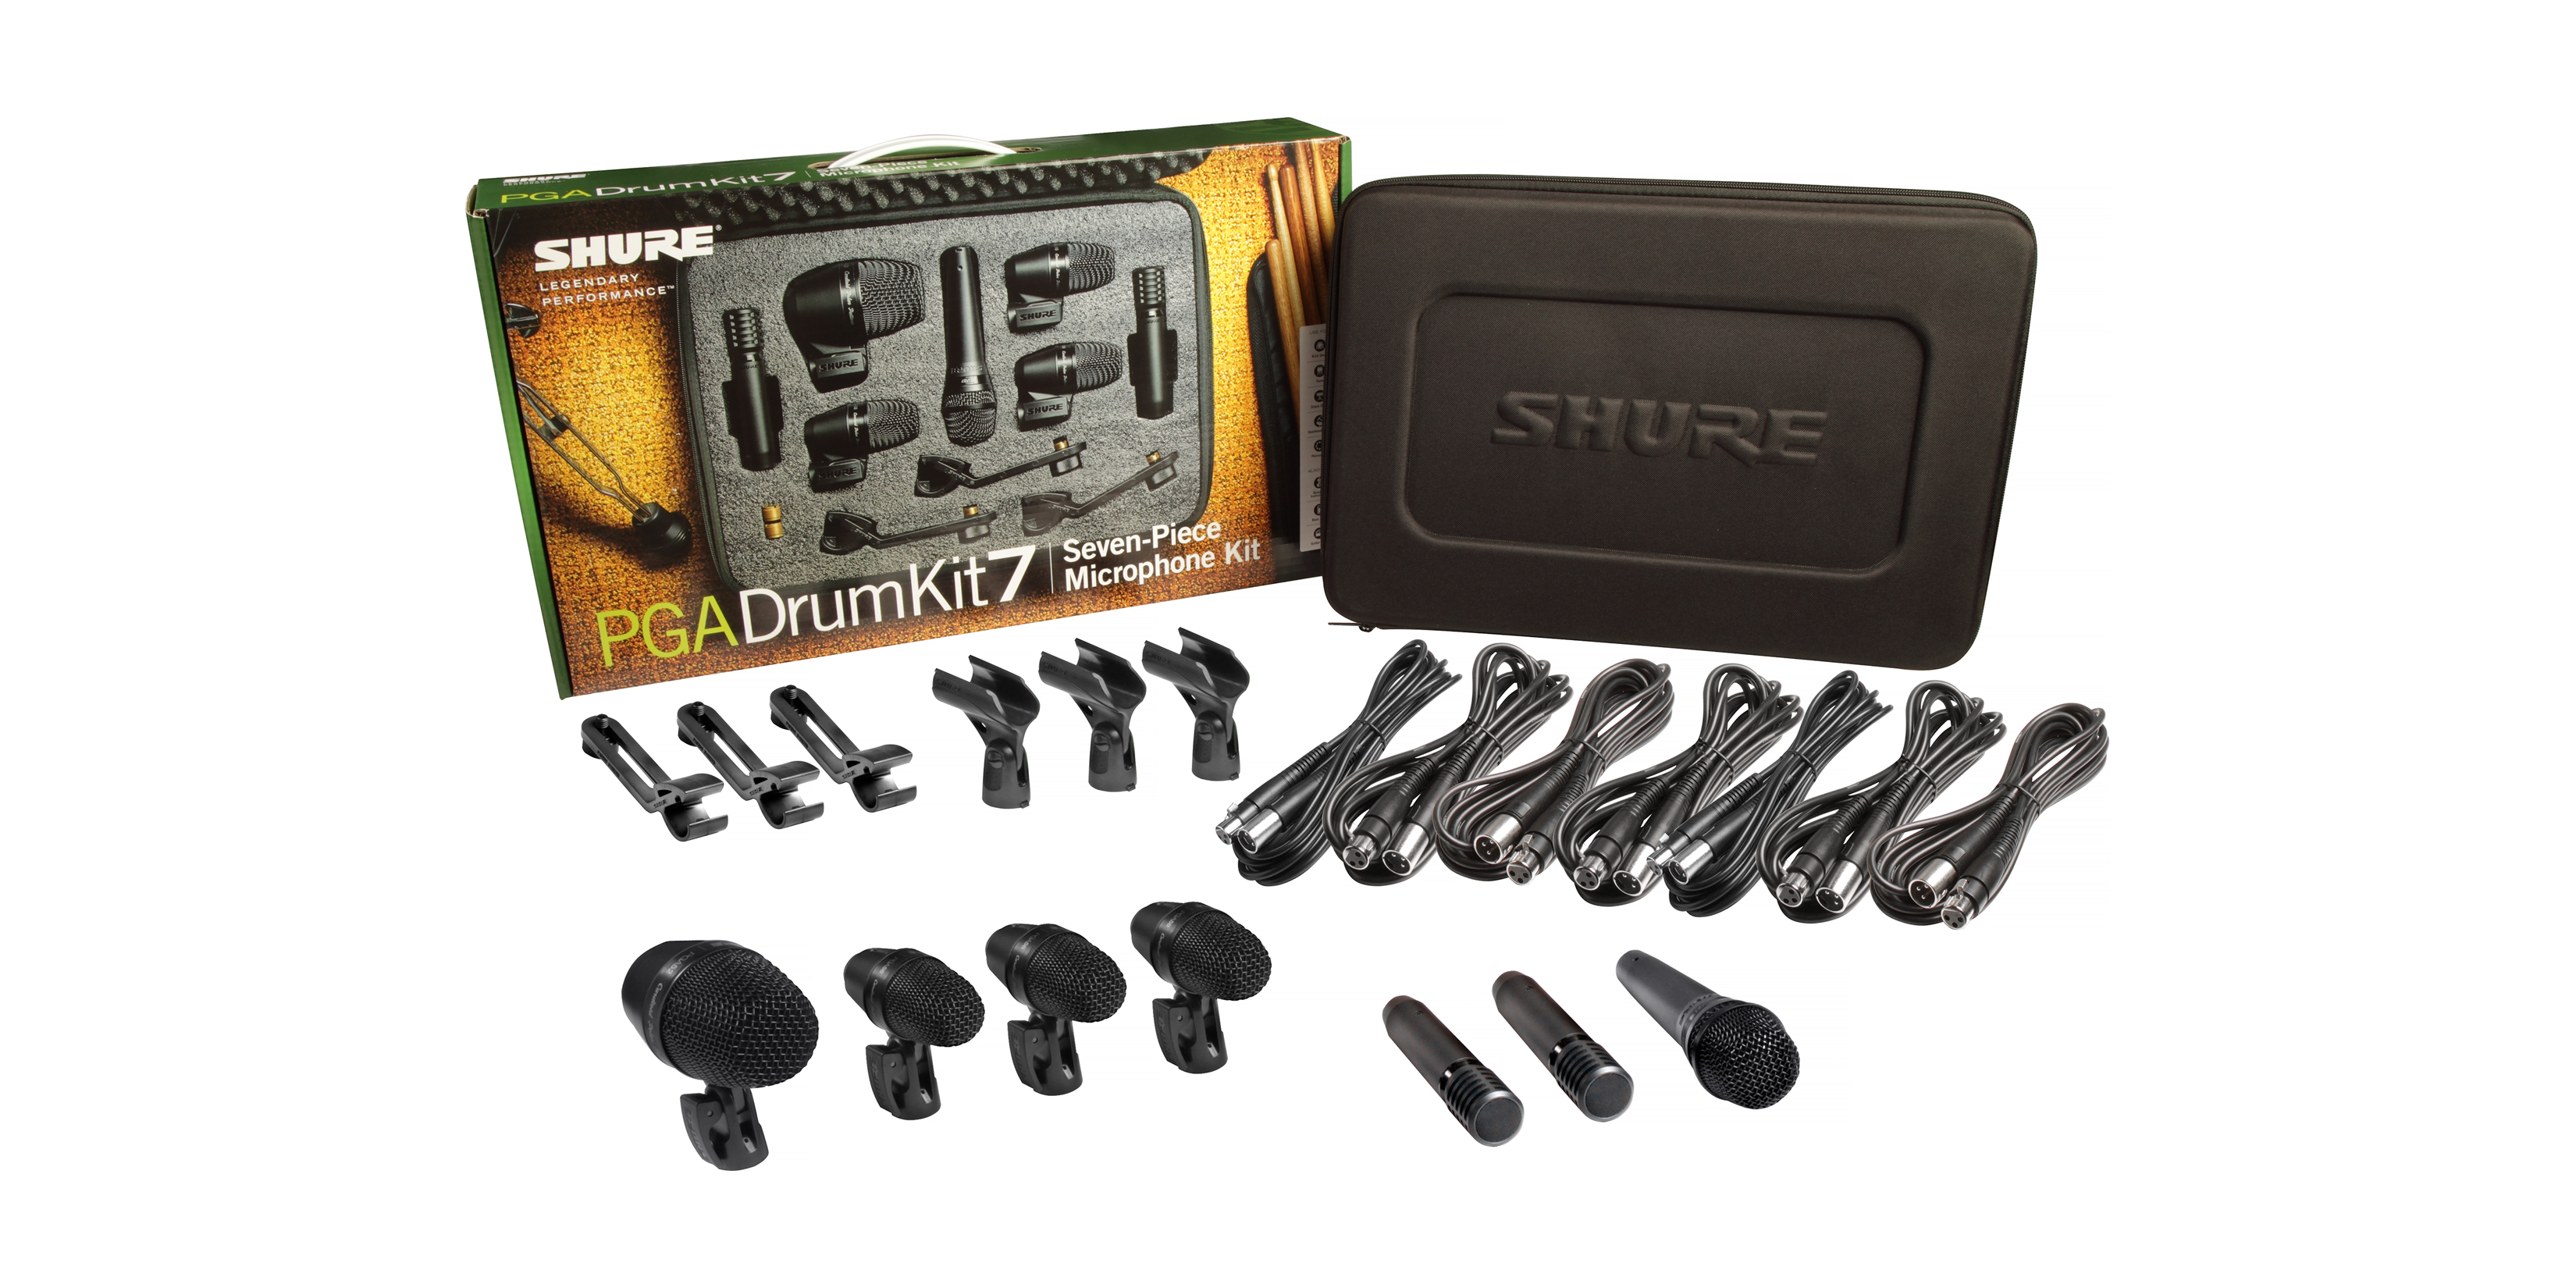 Shure Pga Drumkit 7 - Wired microphones set - Variation 2